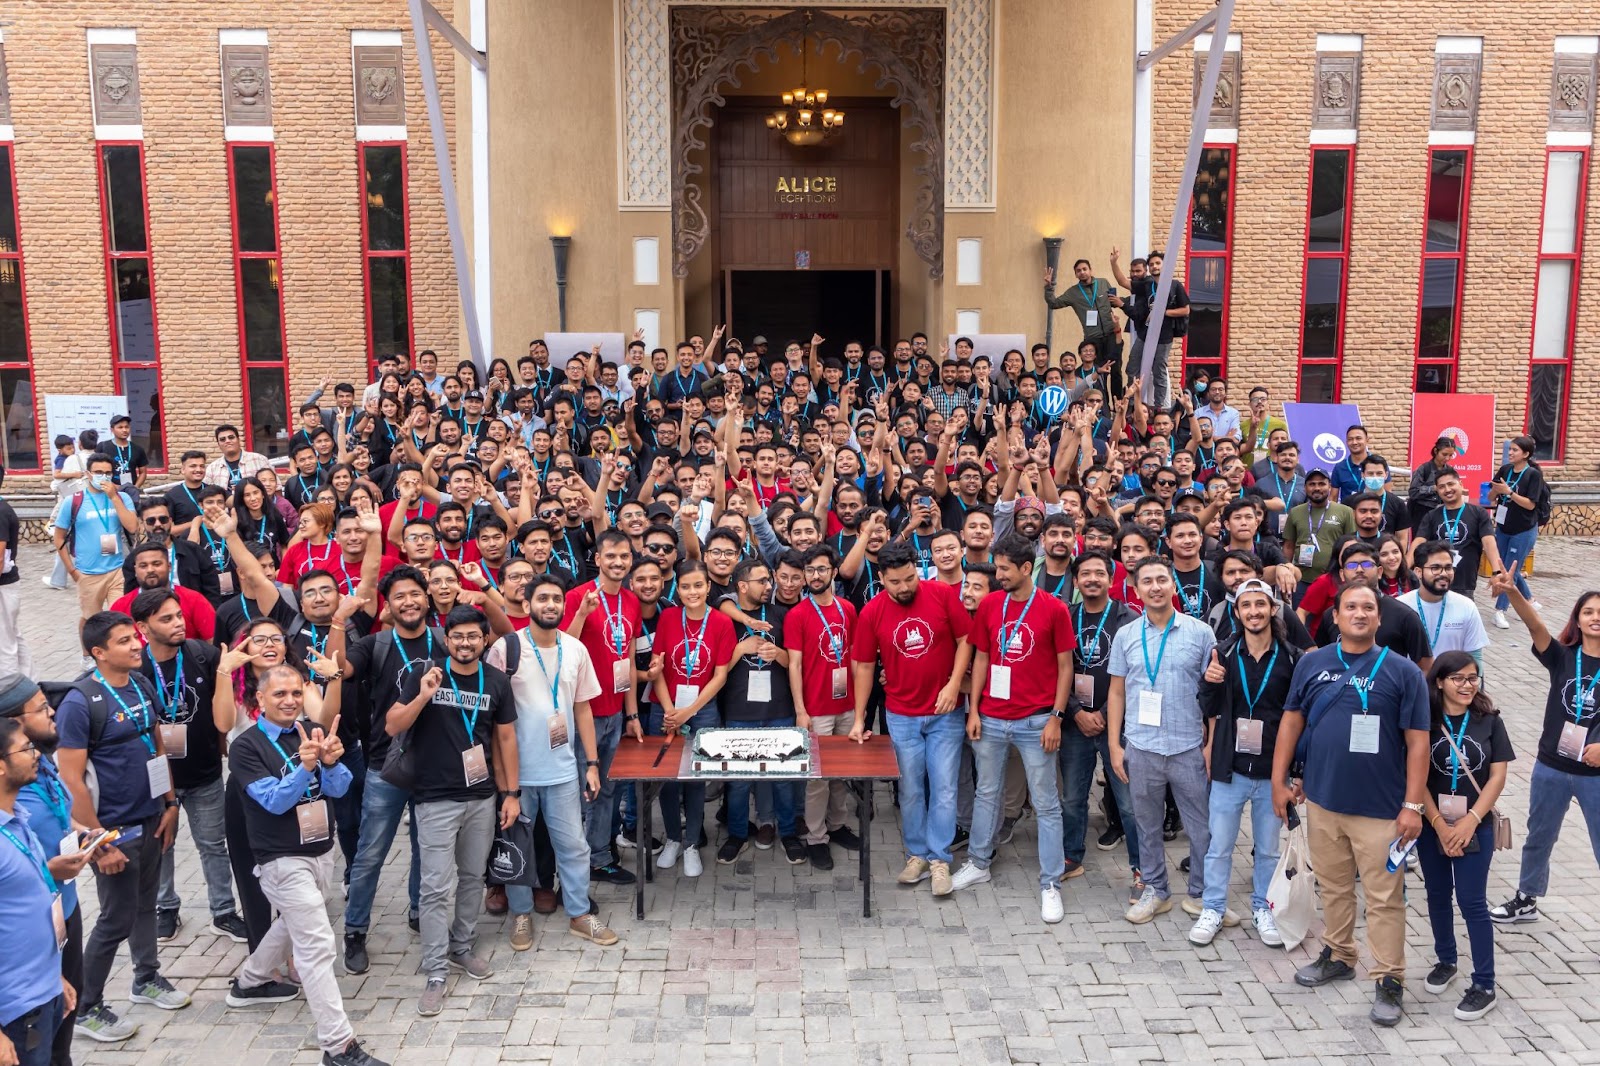 WordCamp Kathmandu